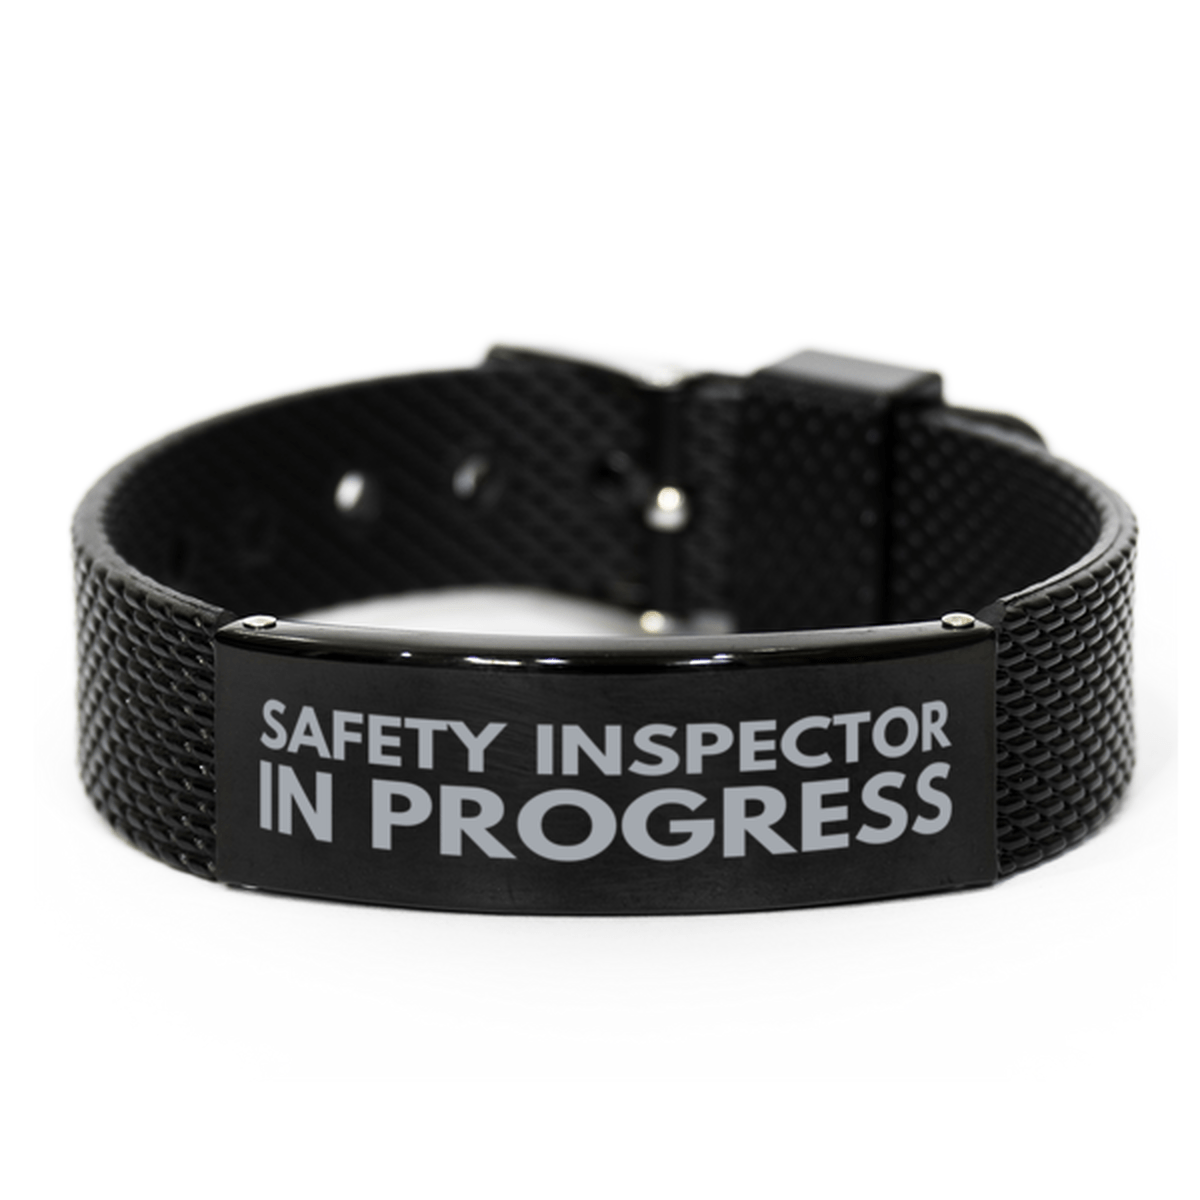 Inspirational Safety Inspector Black Shark Mesh Bracelet, Safety Inspector In Progress, Best Graduation Gifts for Students